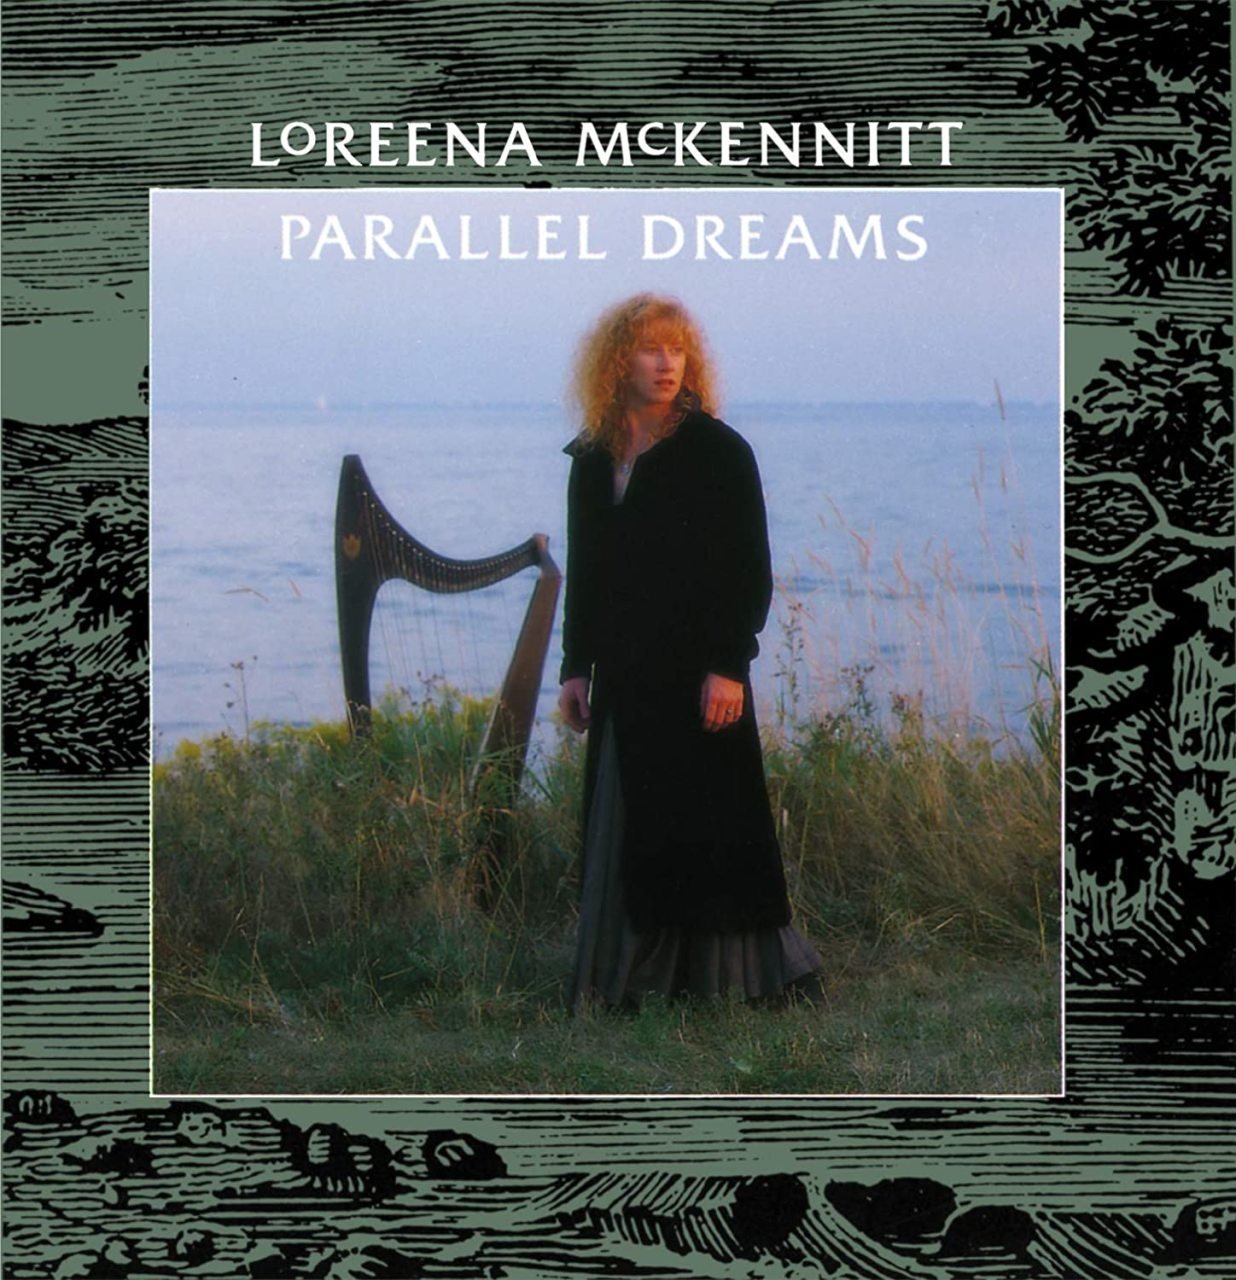 LOREENA McKENNITT - PARALLEL DREAMS (1989) - LP 180GR 2016 NUMBERED LTD EDT SIFIR PLAK